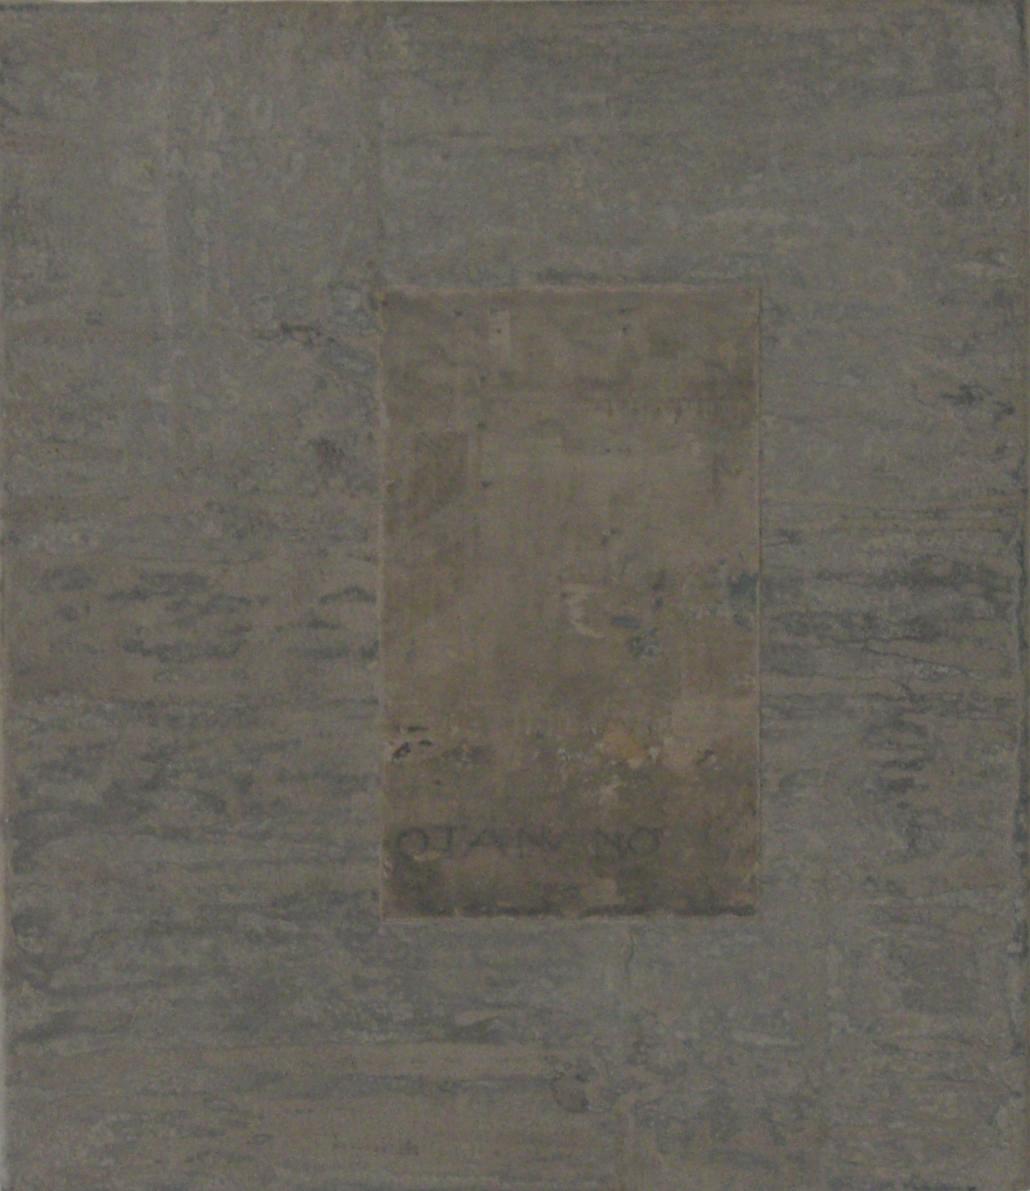 Wand 2004 - 44 x 38 cm